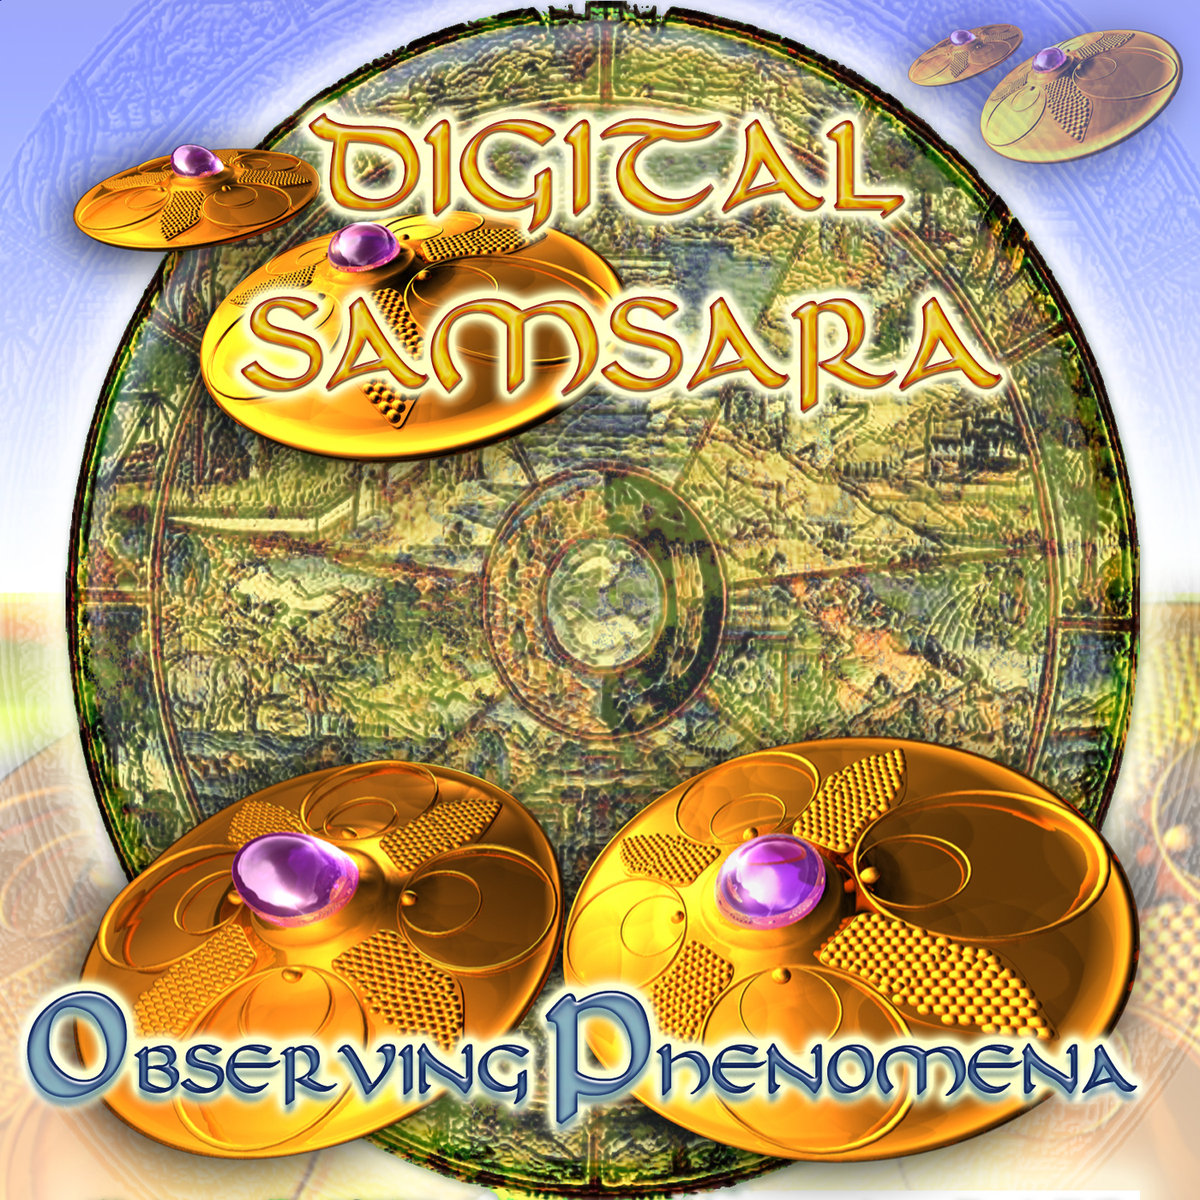 Digital Samsara - The Wave @ 'Observing Phenomena' album (electronic, goa)